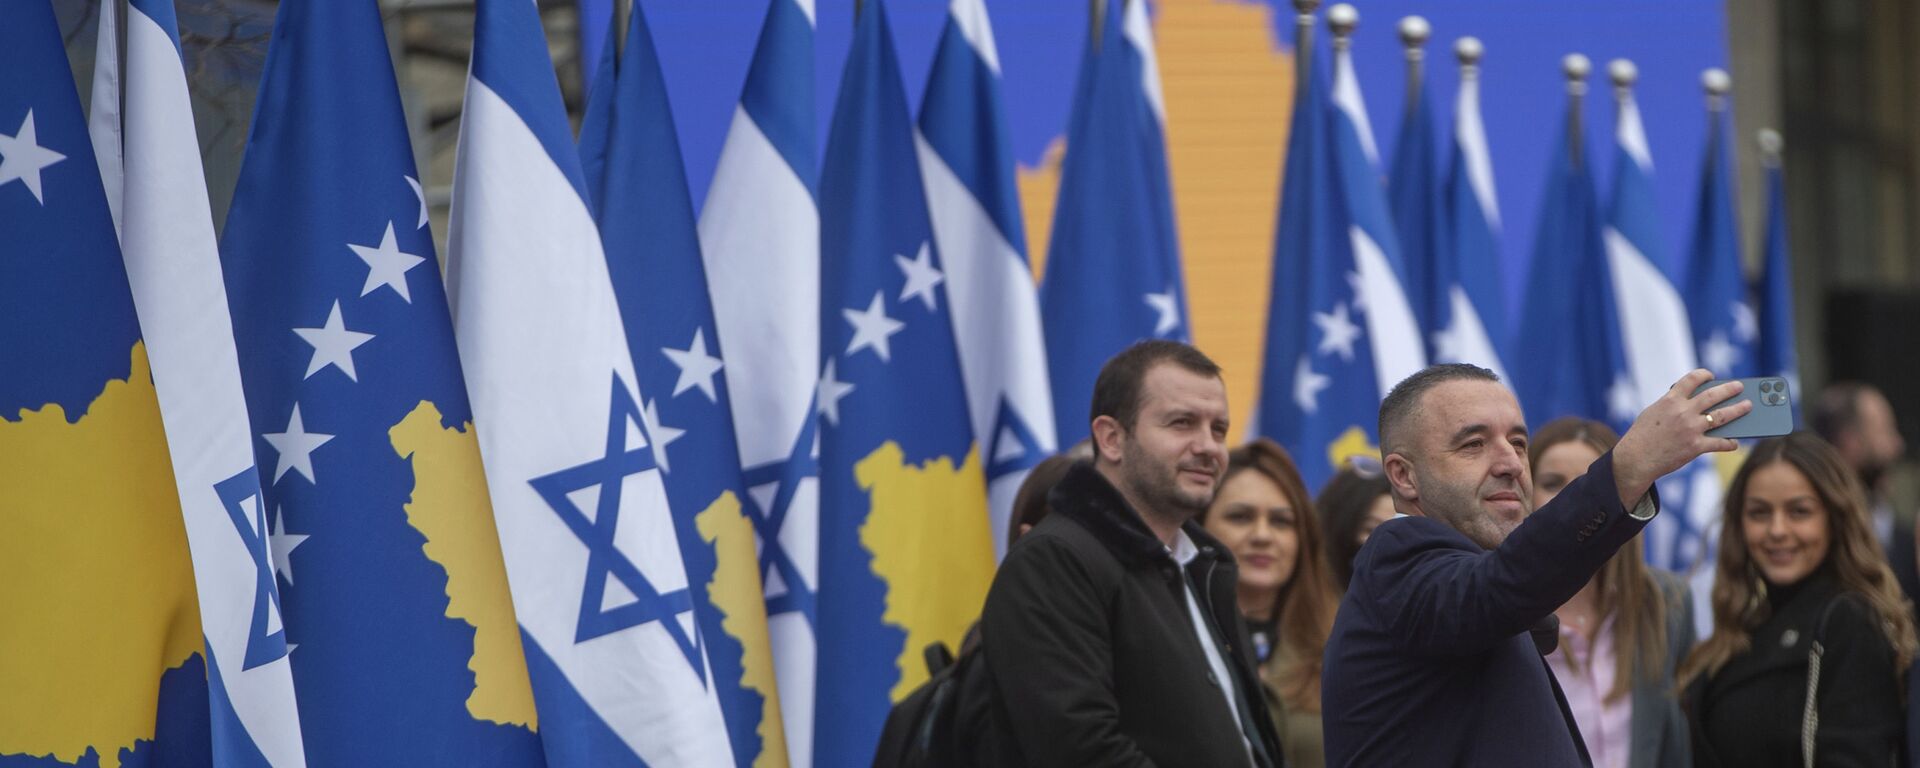 Izraelske zastave u Prištini povodom uspostavljanja diplomatskih odnosa sa takozvanim Kosovom - Sputnik Srbija, 1920, 14.03.2021